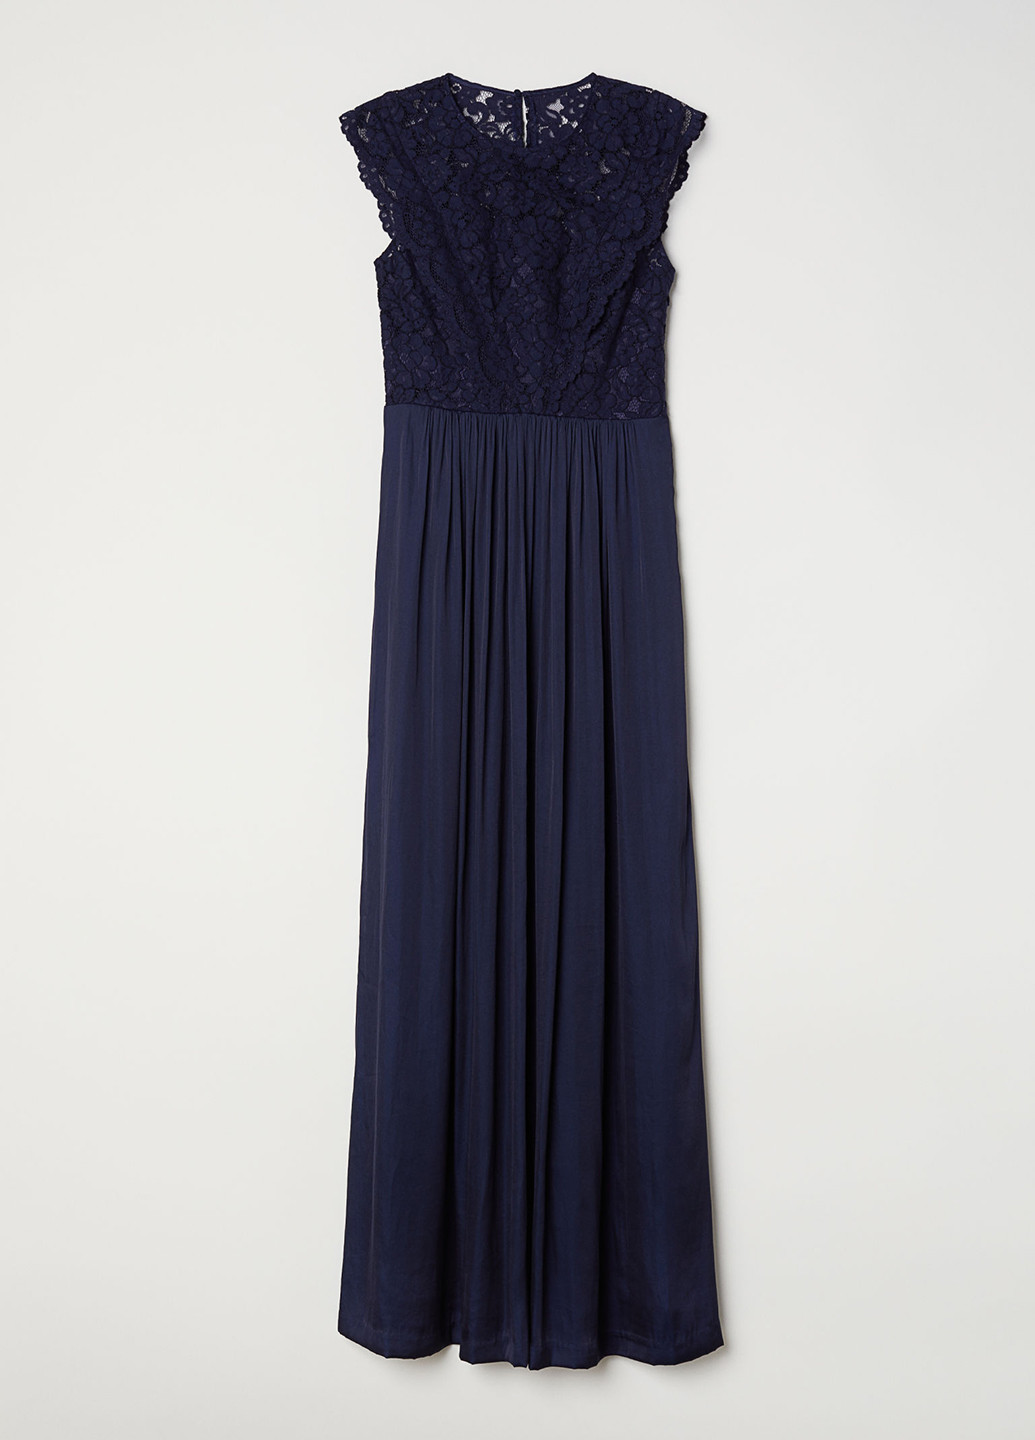 Темно-синее вечернее платье а-силуэт H&M фактурное